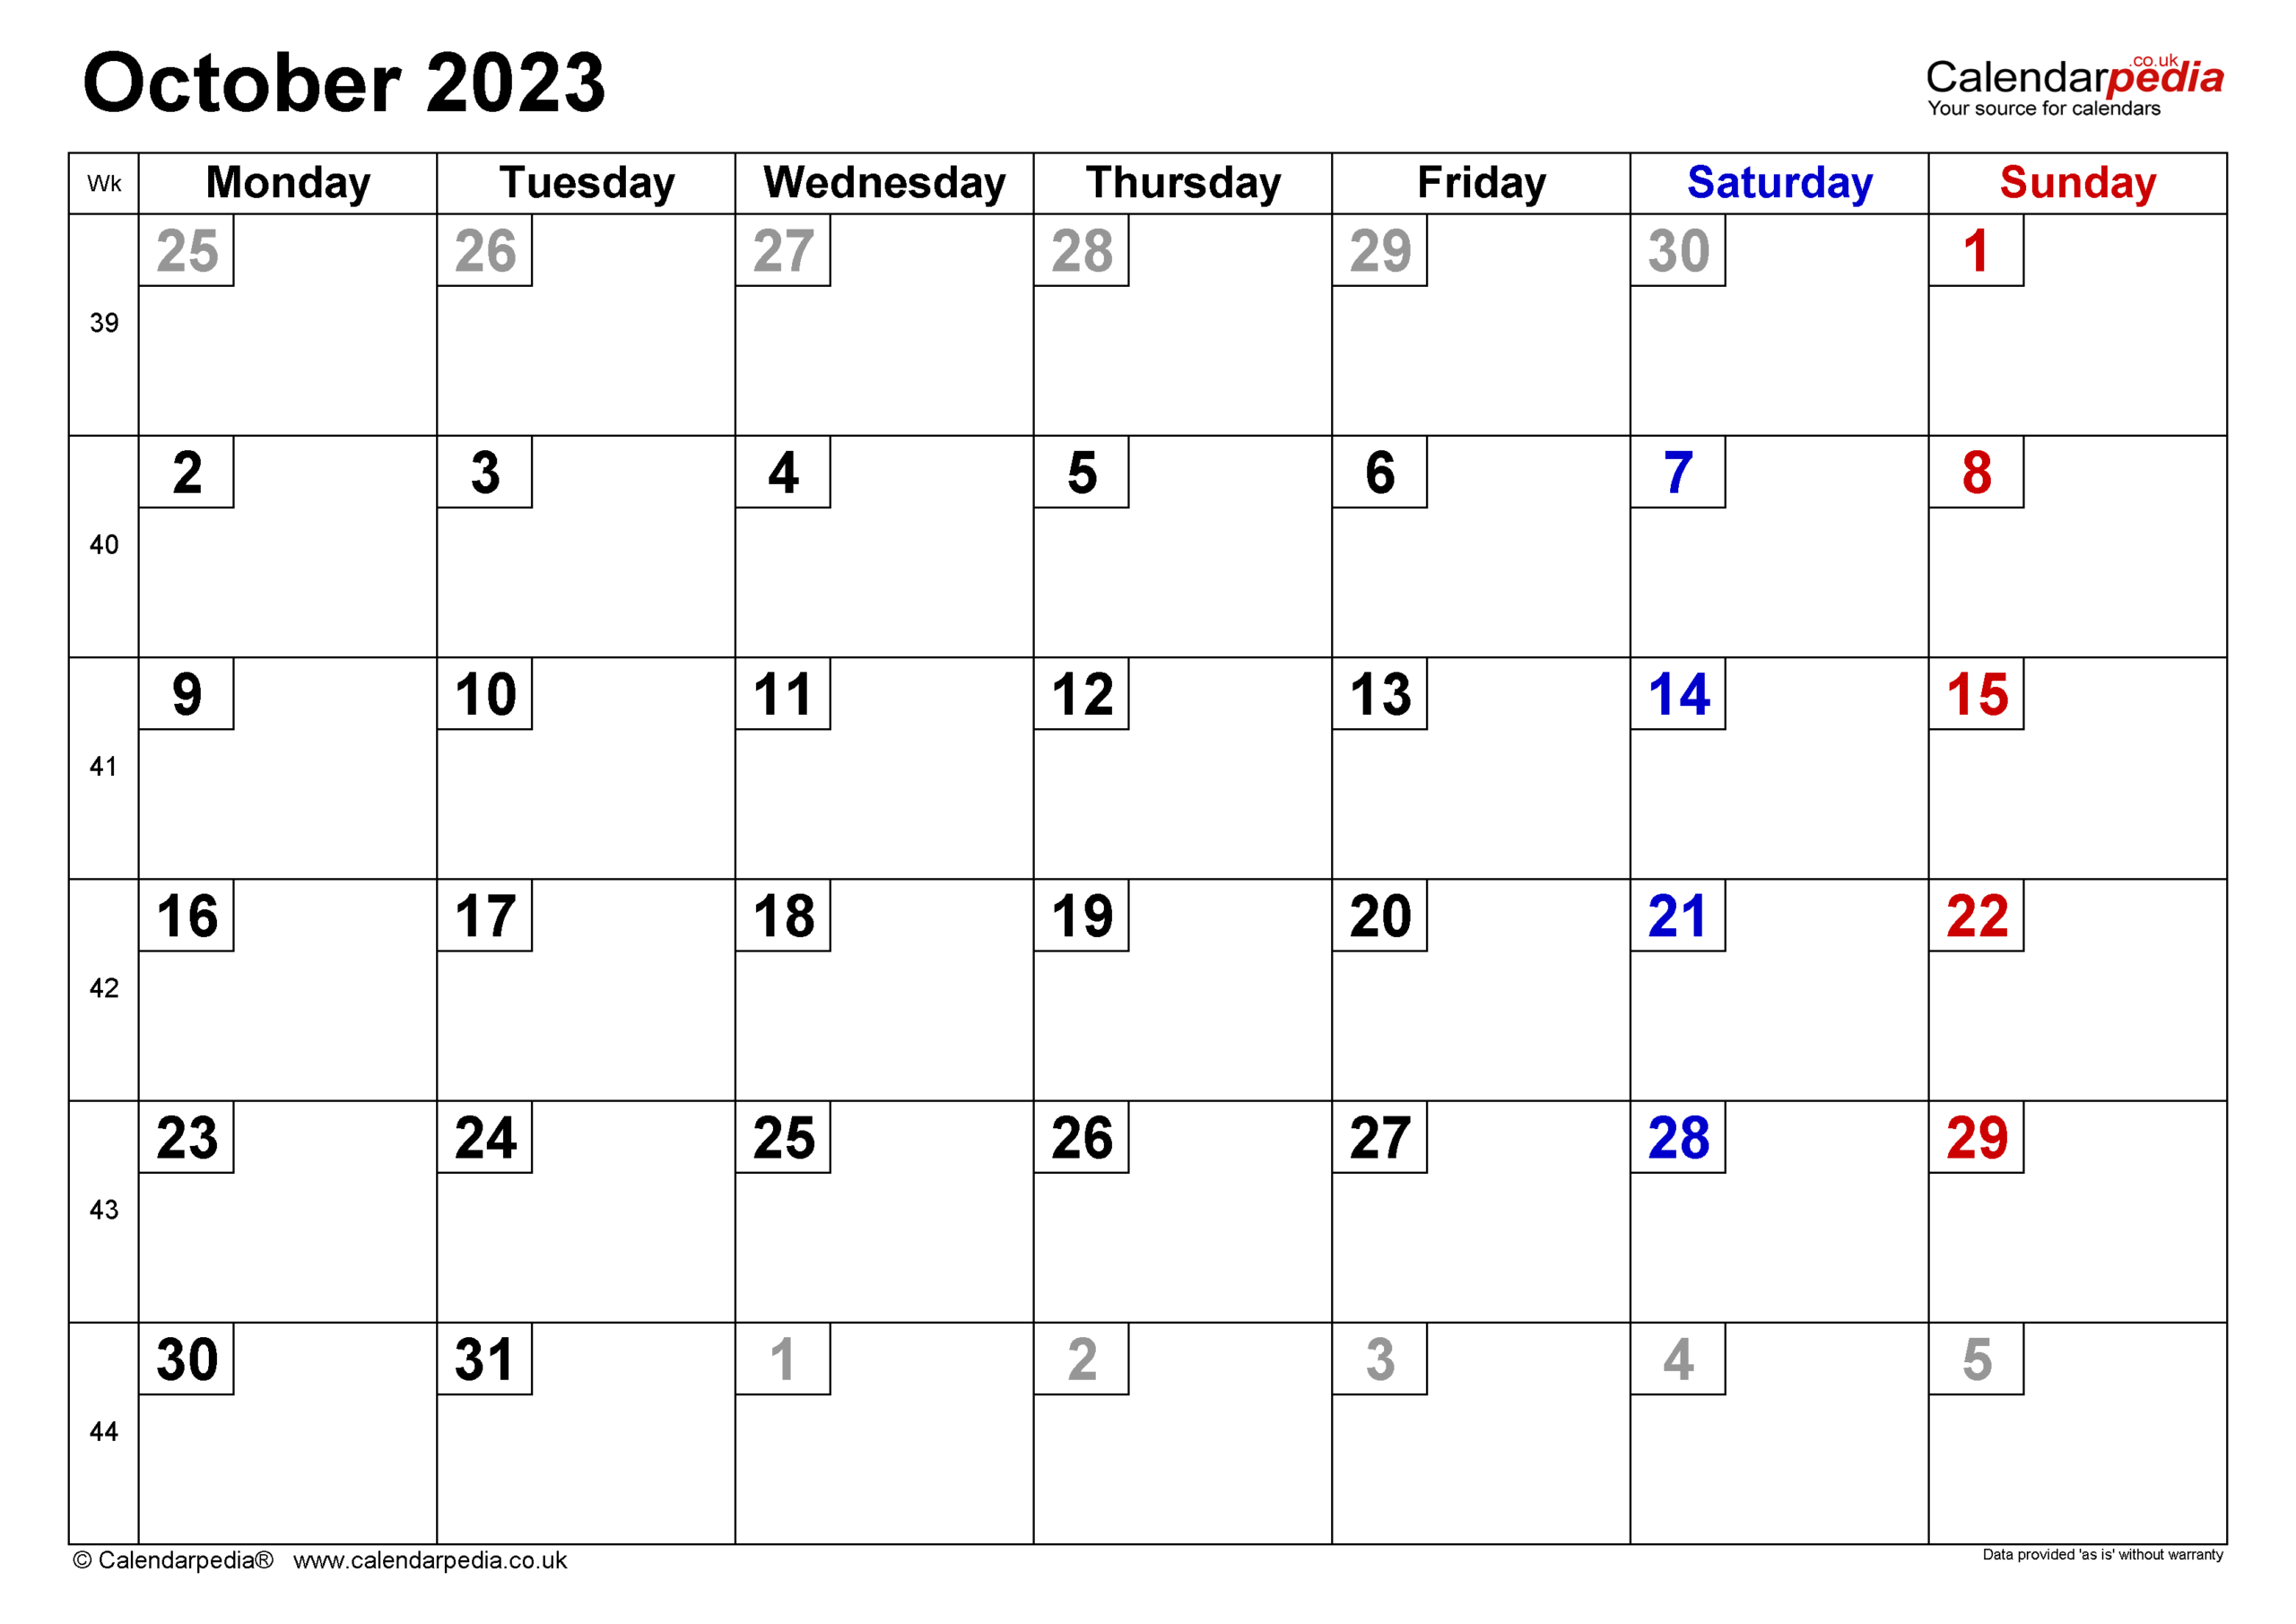 Get 2022 October Calendar With Festivals